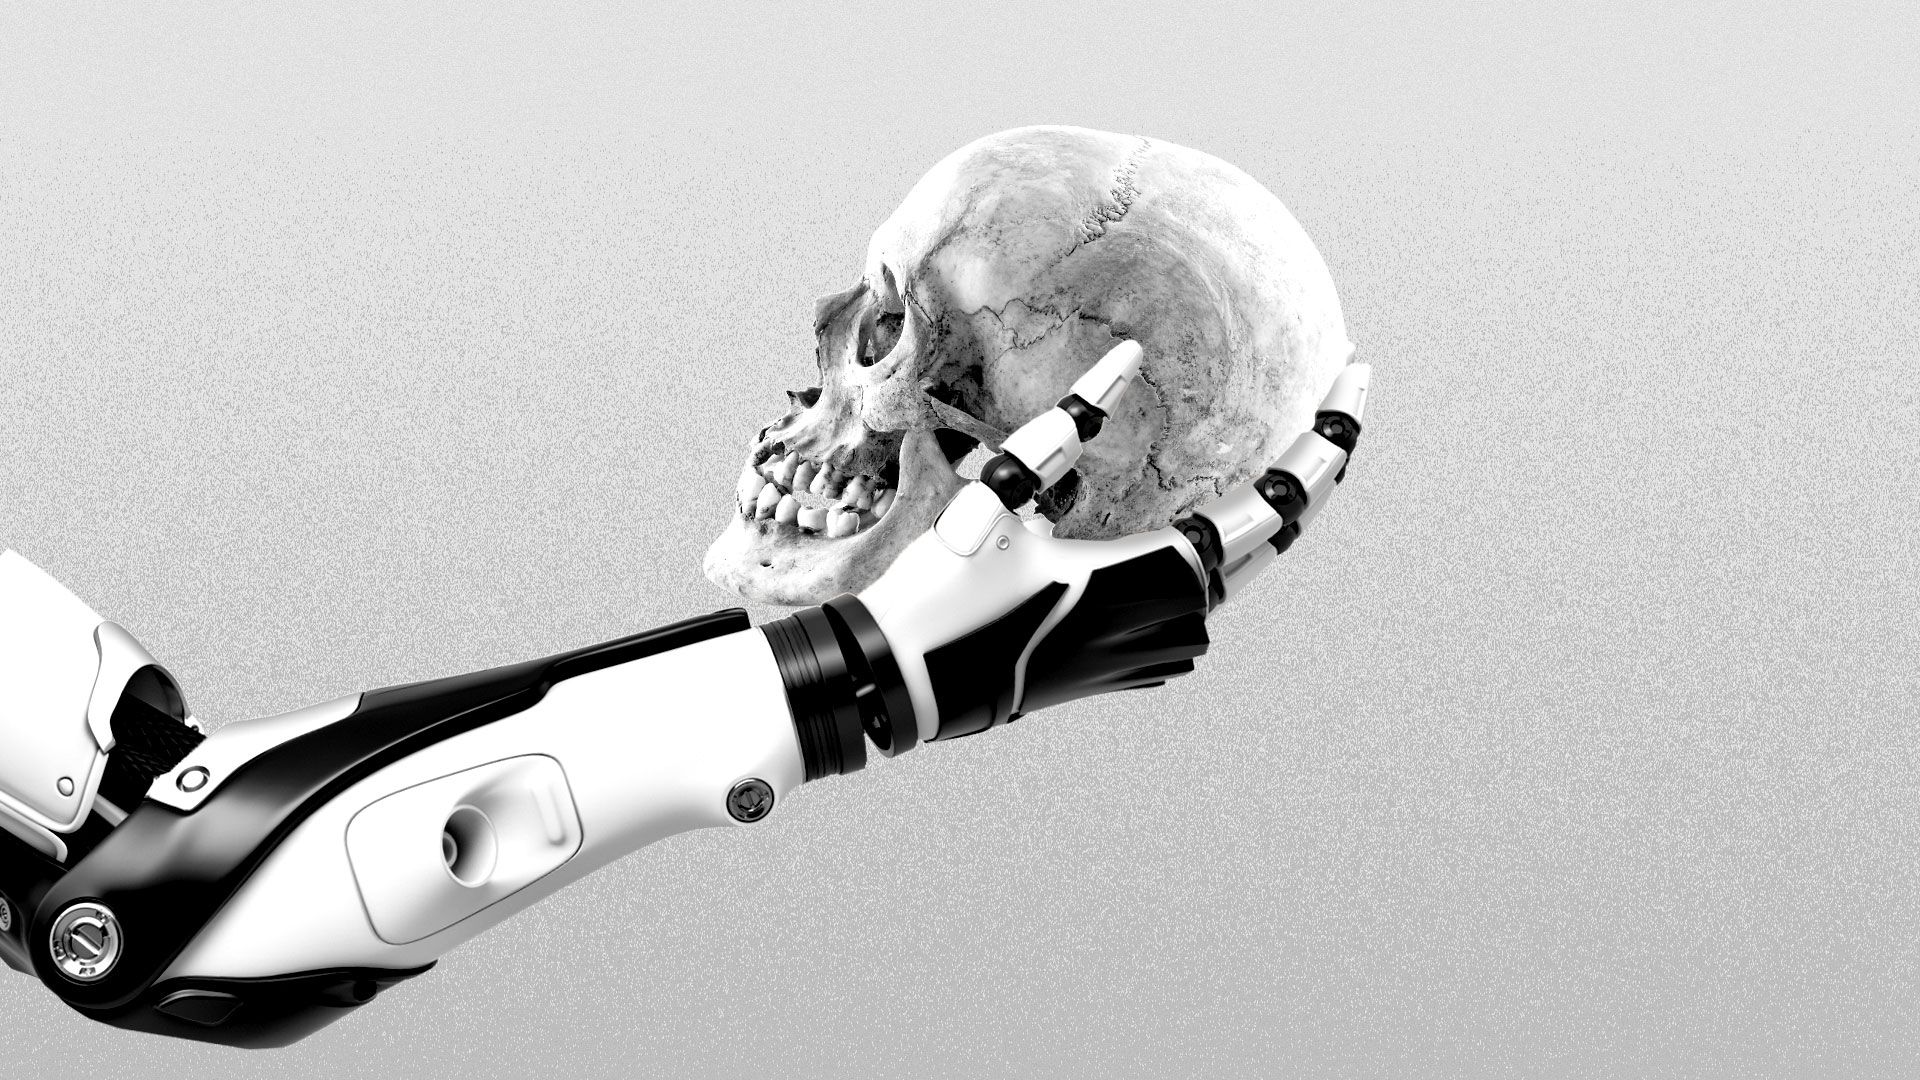 Illustration of a robot arm holding a human skull à la Hamlet